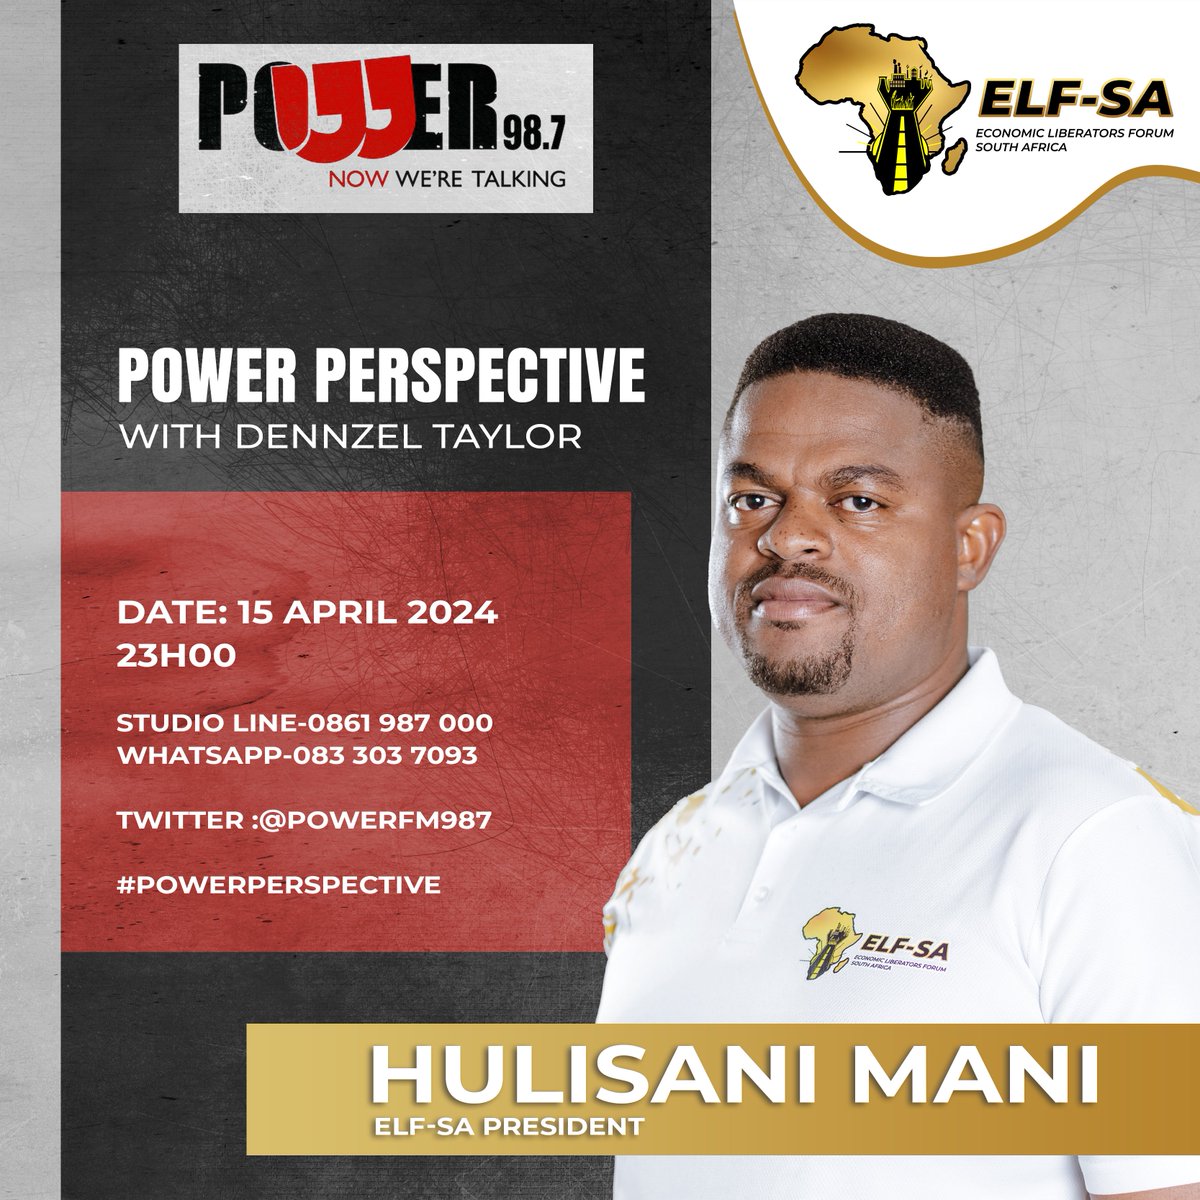 Tune into Power FM interview with President Hulisani Mani tonight at 23h00
#ELF #ELF_SA #ELFSouthAfrica #TheNextStepIsChange
#OwnYourEconomy #BeTheChange